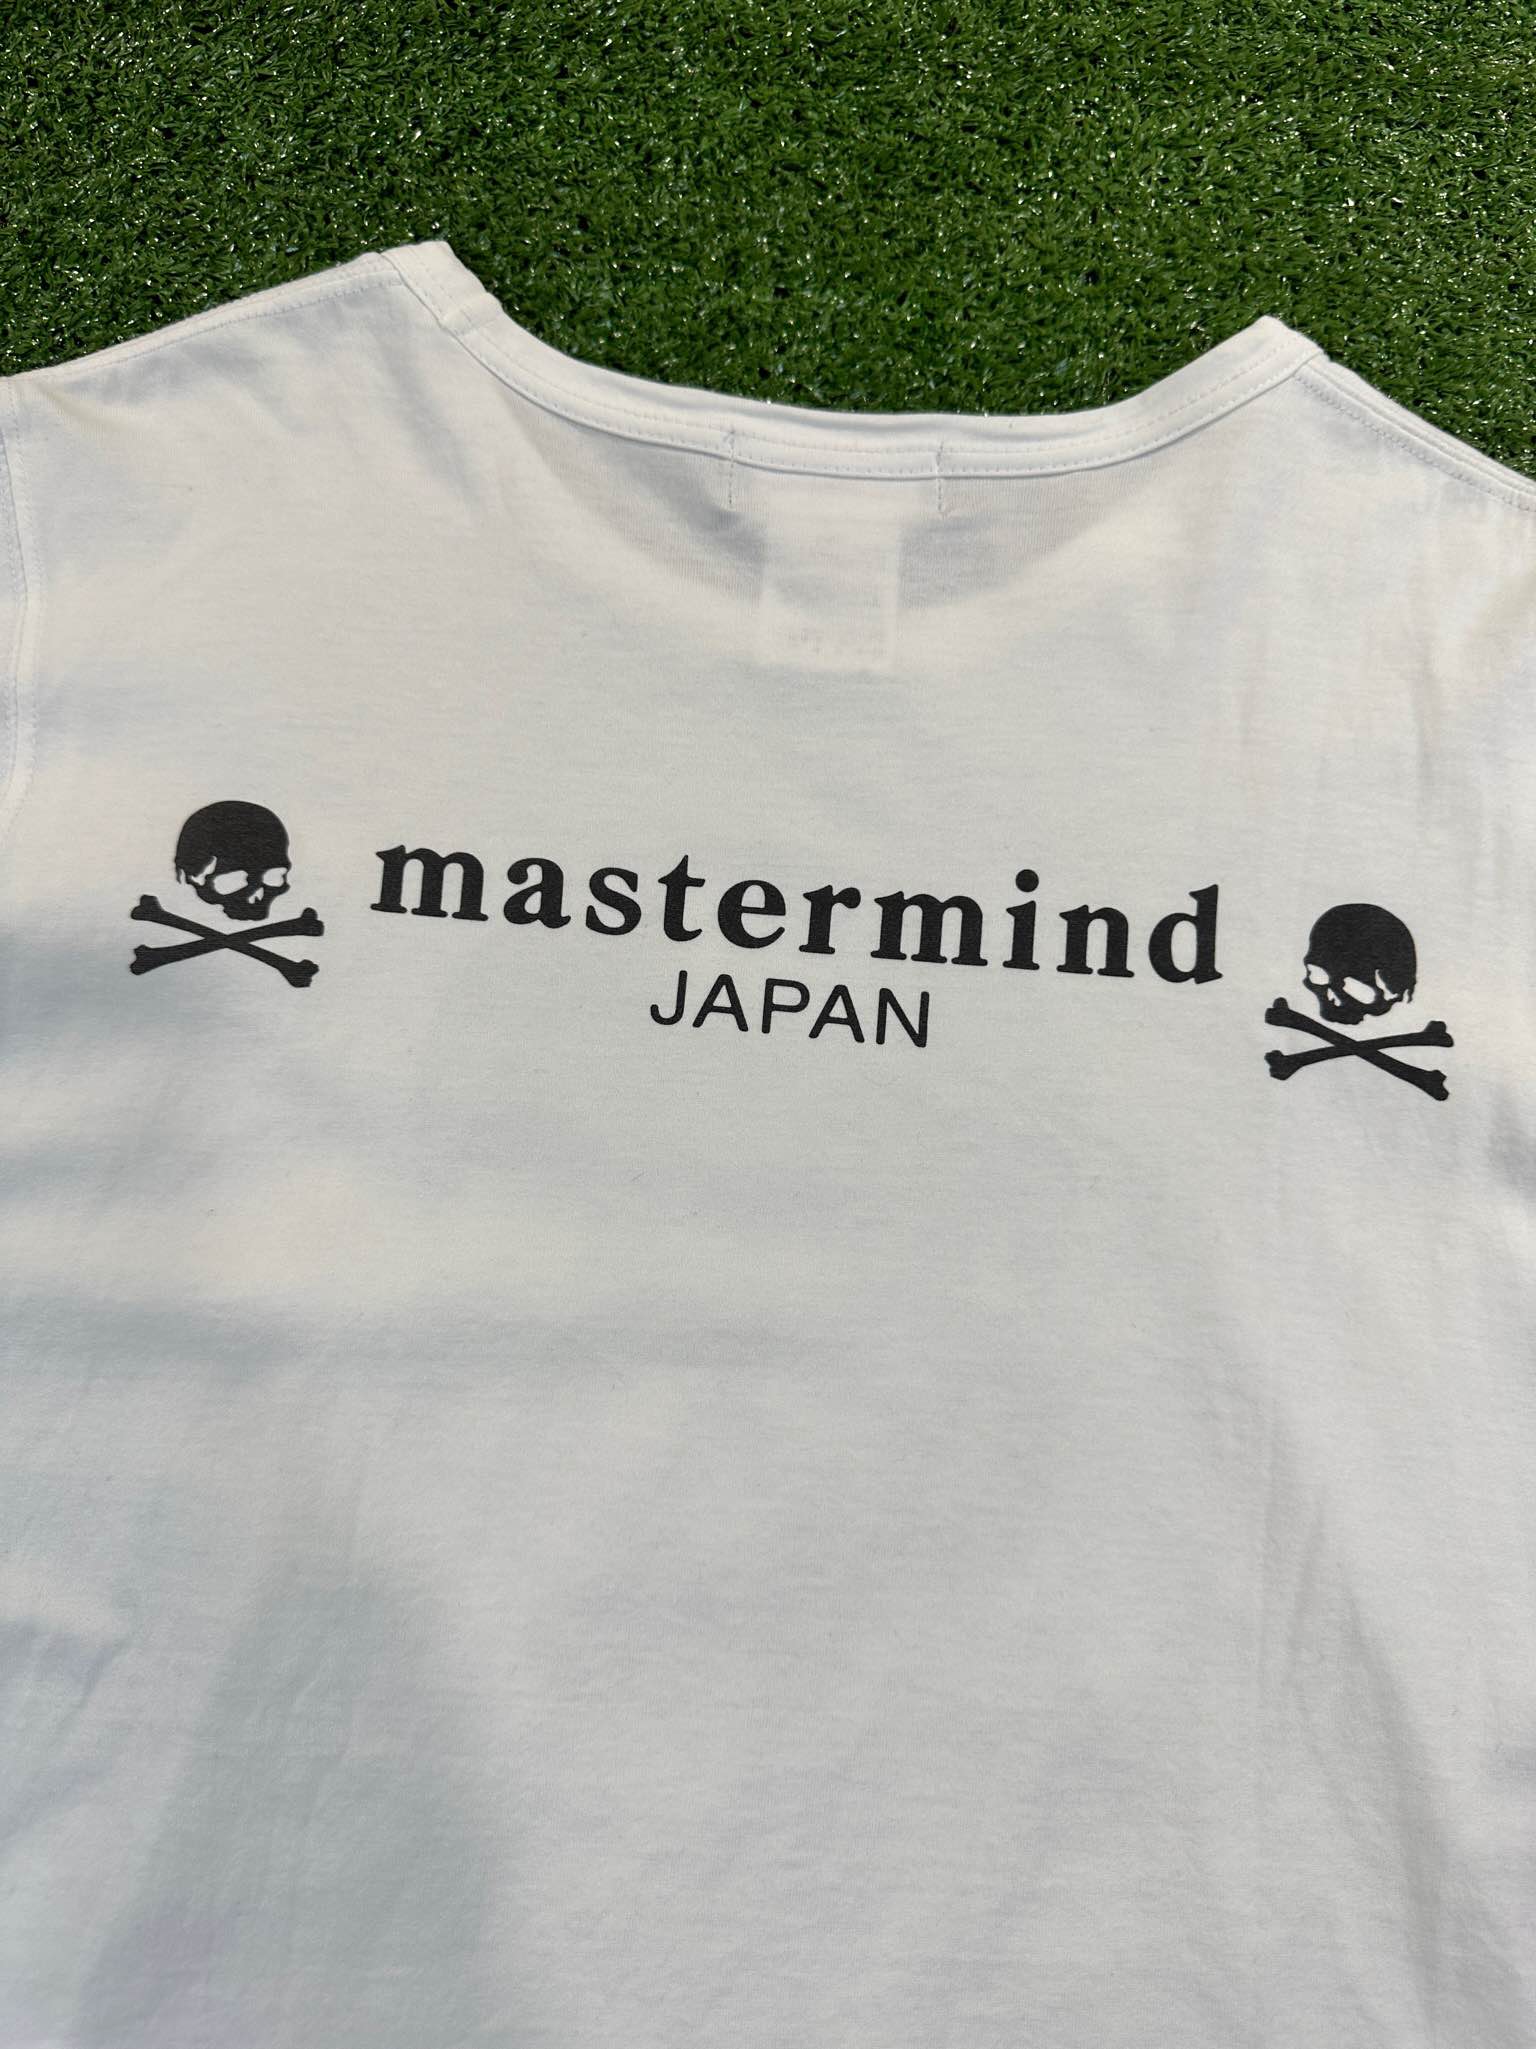 Mastermind Japan X Theatre 8 White Madonna Nudes Tee - 4